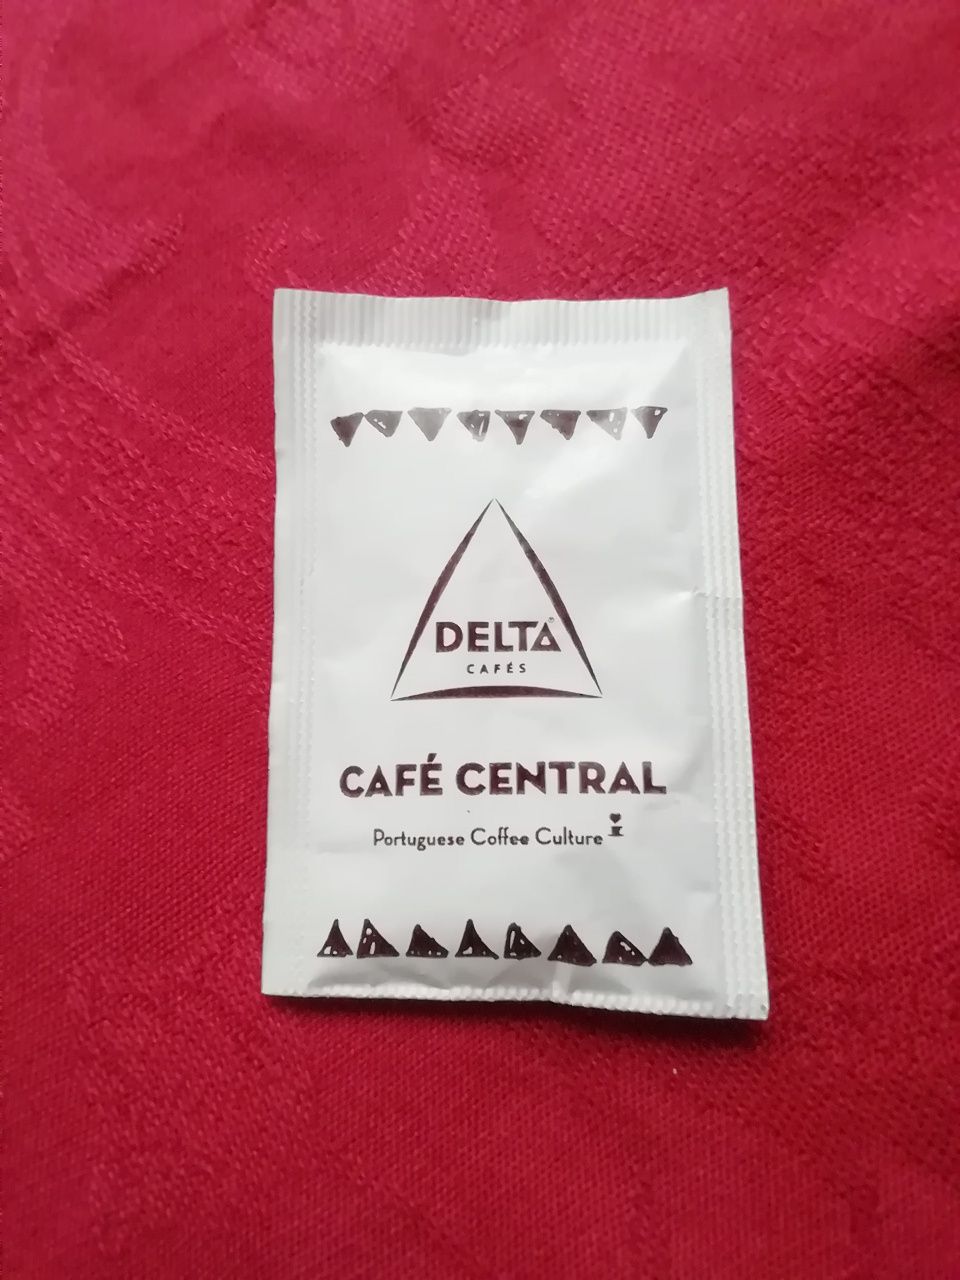 Pacote de açúcar Delta - Café Central, novo